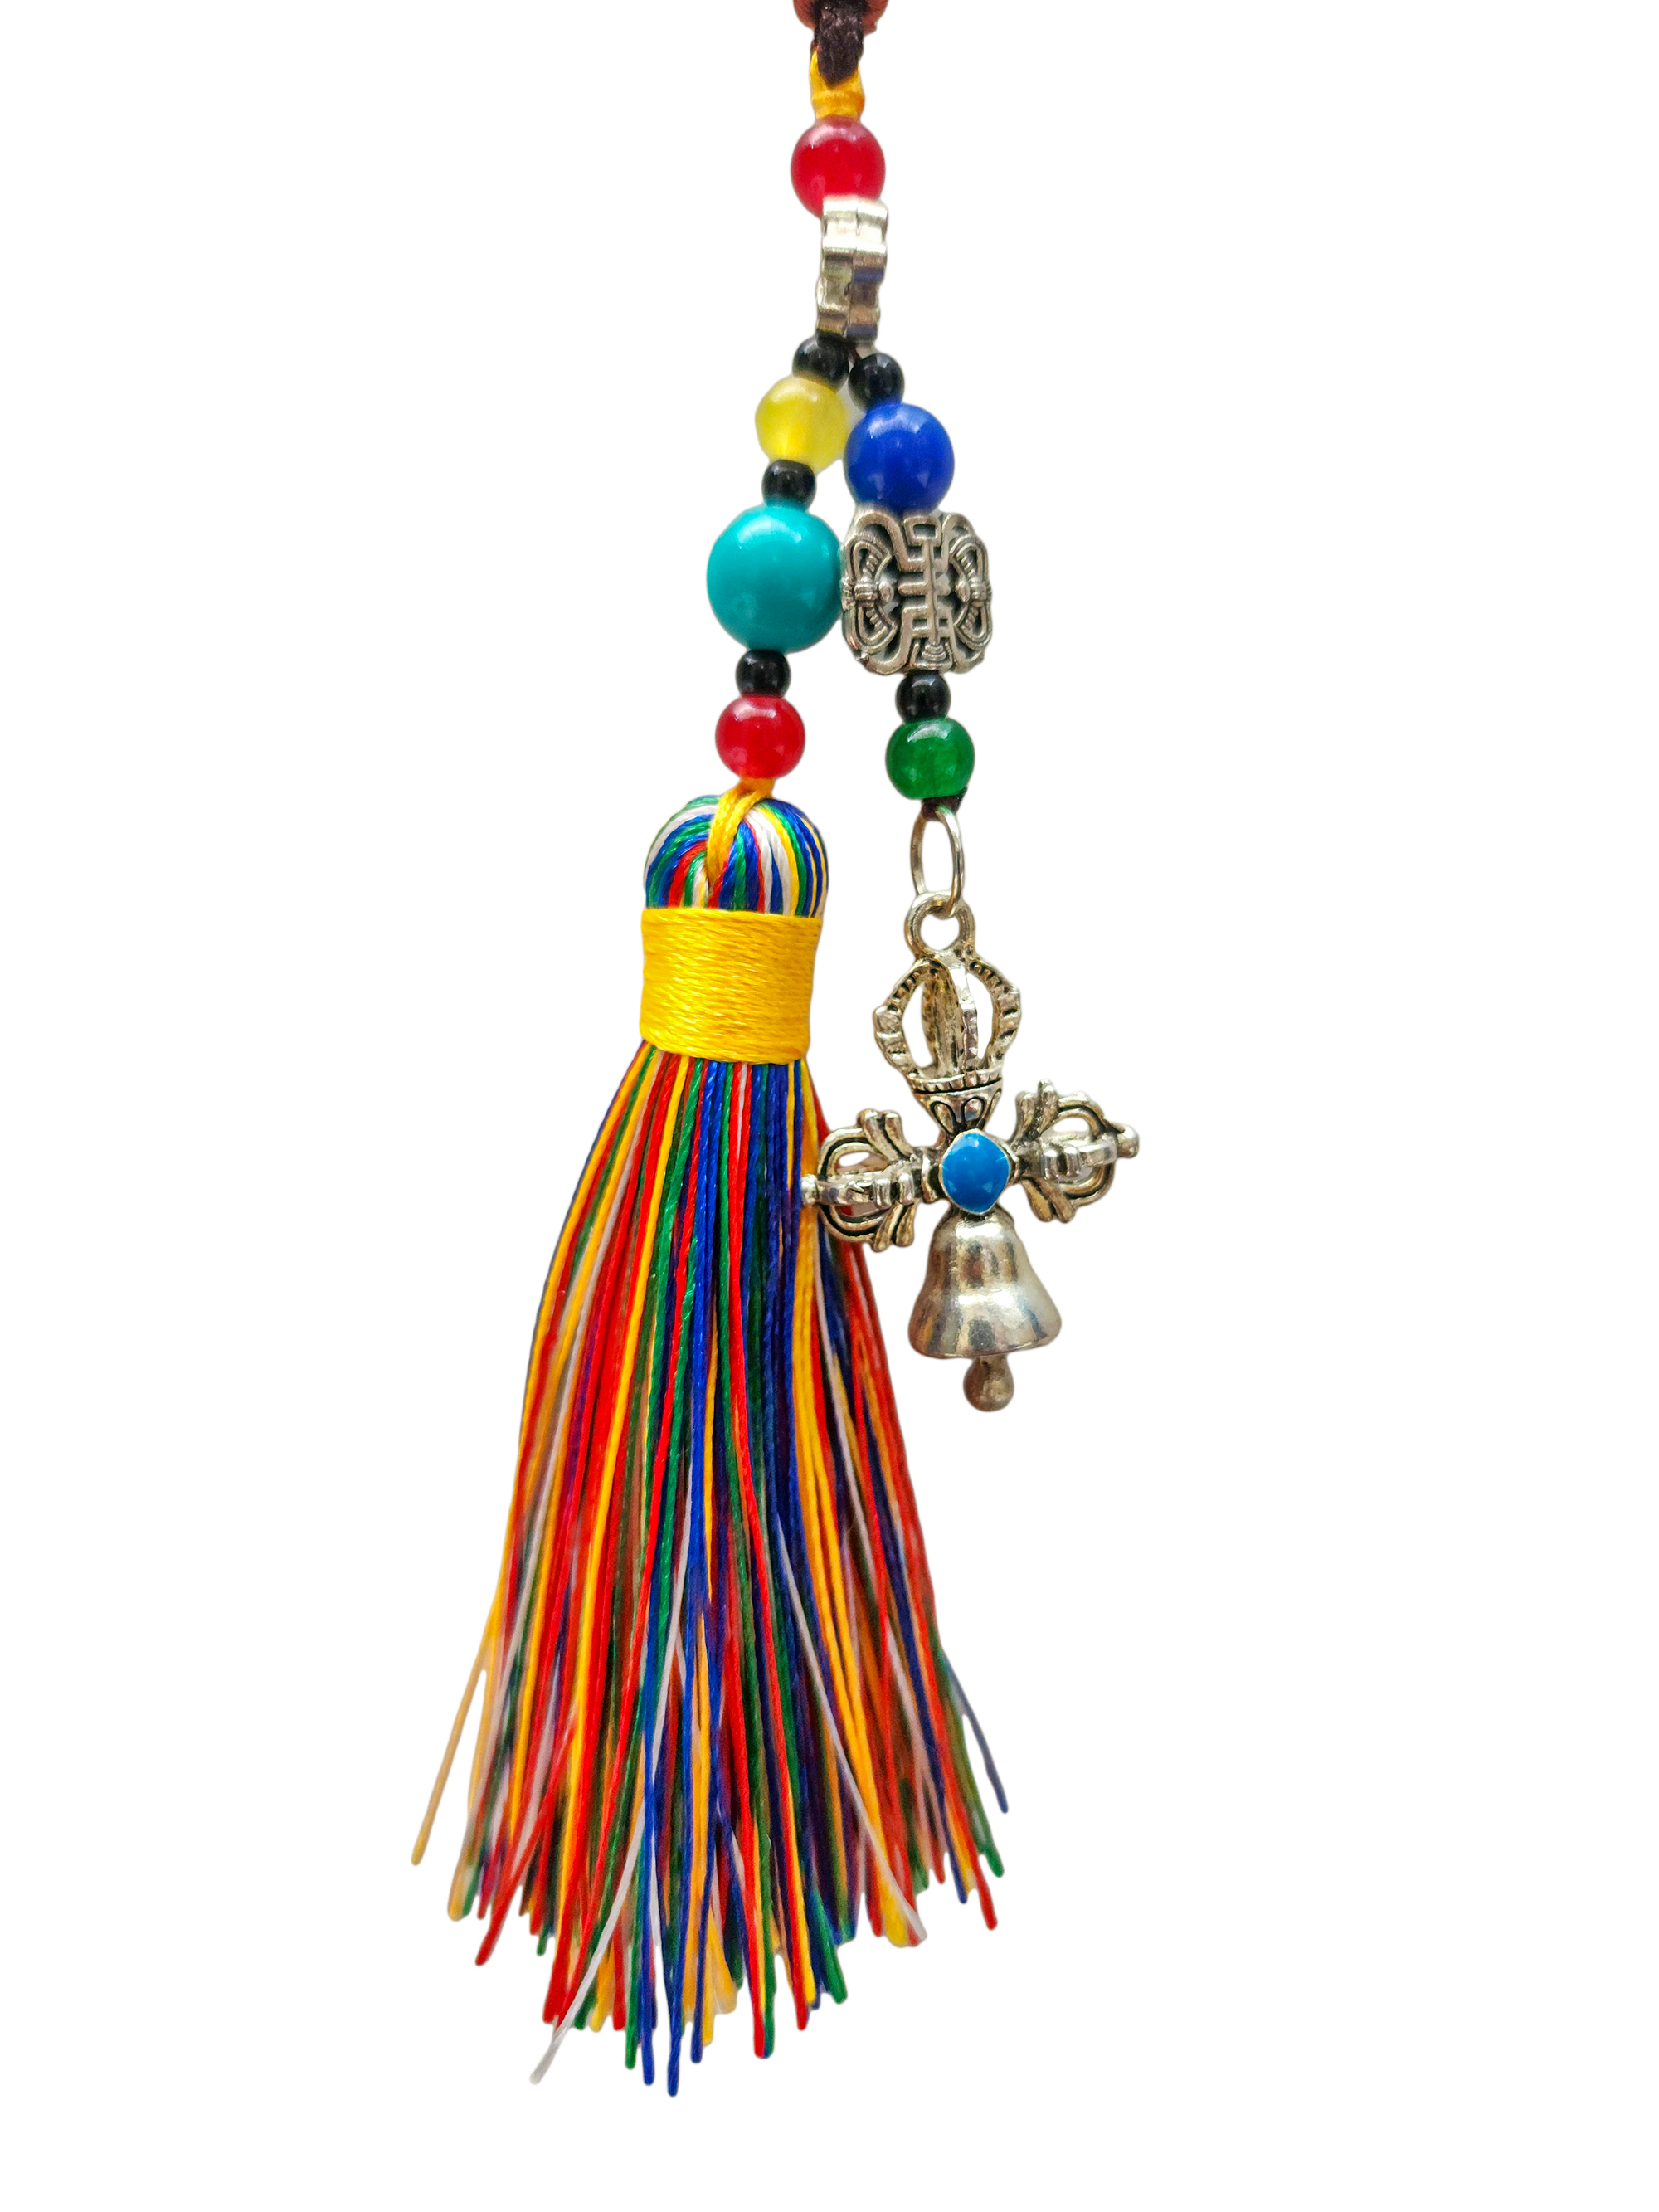 Buddhist Ritual Amulet Hanging <span Style=